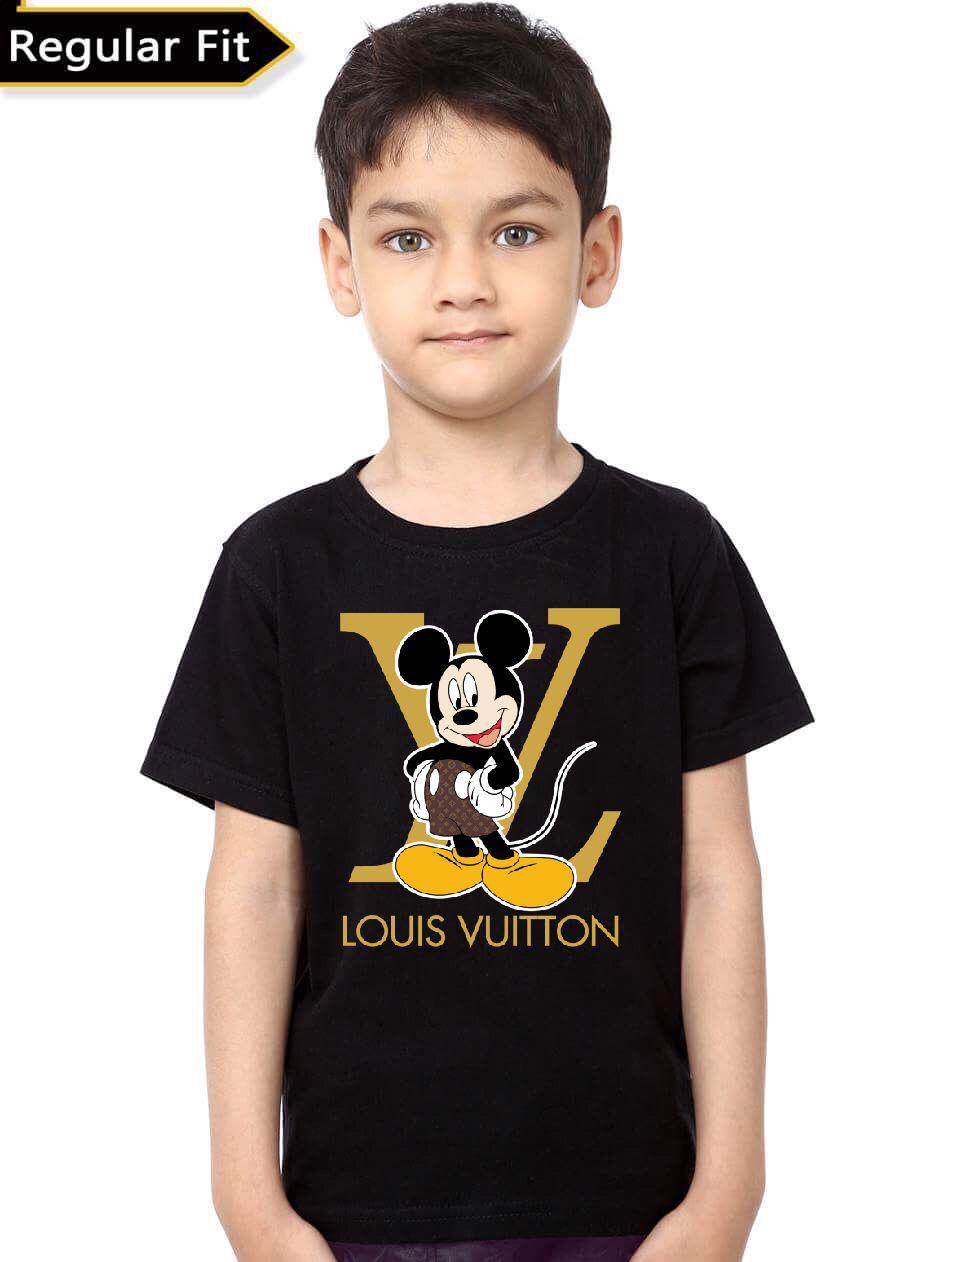 LOUIS VUITTON T-SHIRTS FOR KIDS 